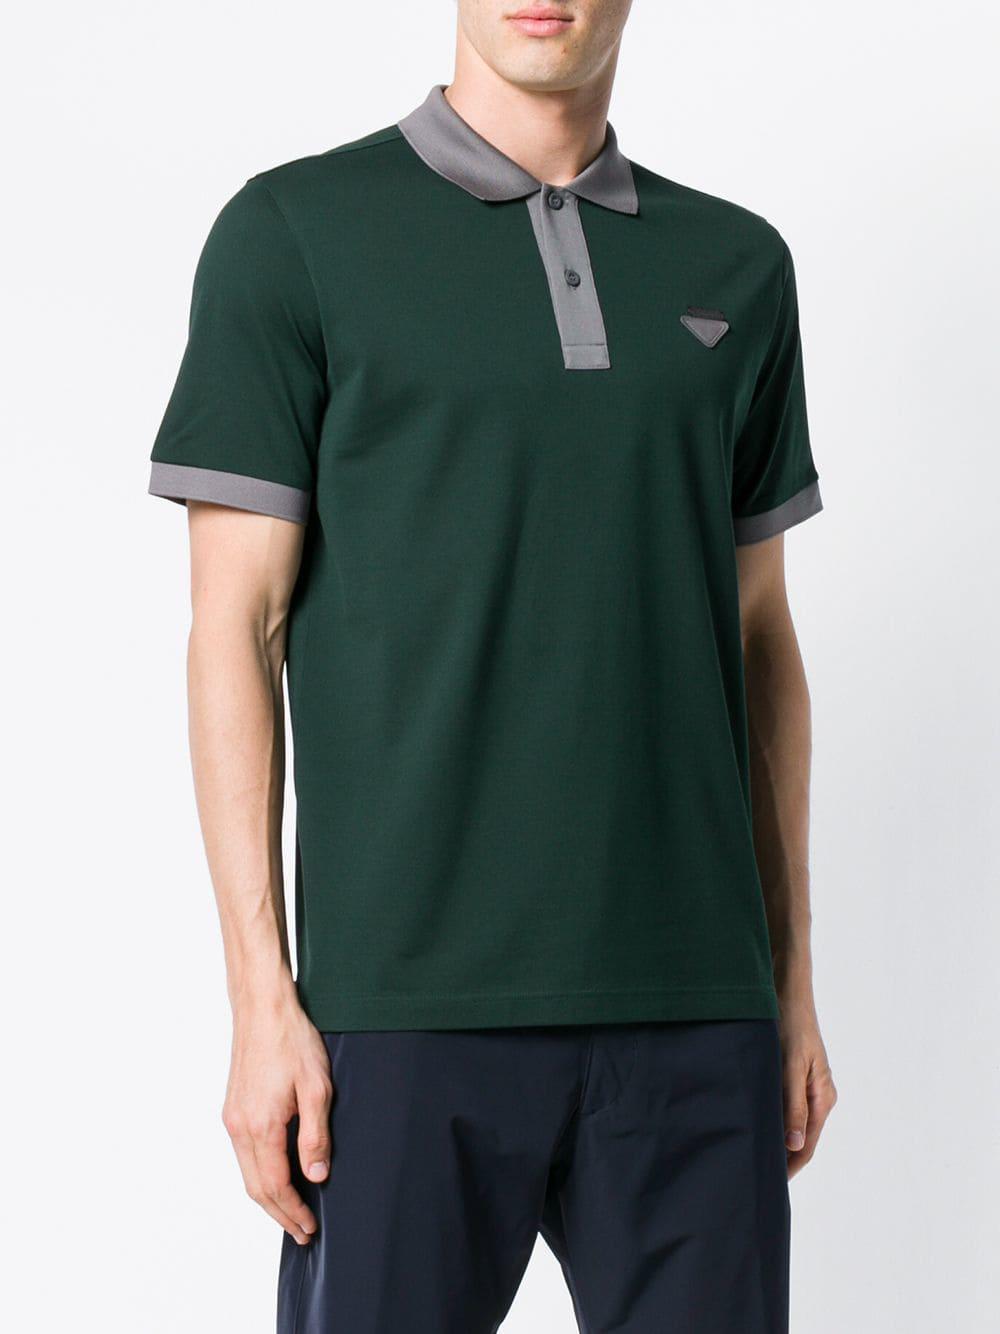 Prada Logo Polo Shirt in Green for Men - Lyst